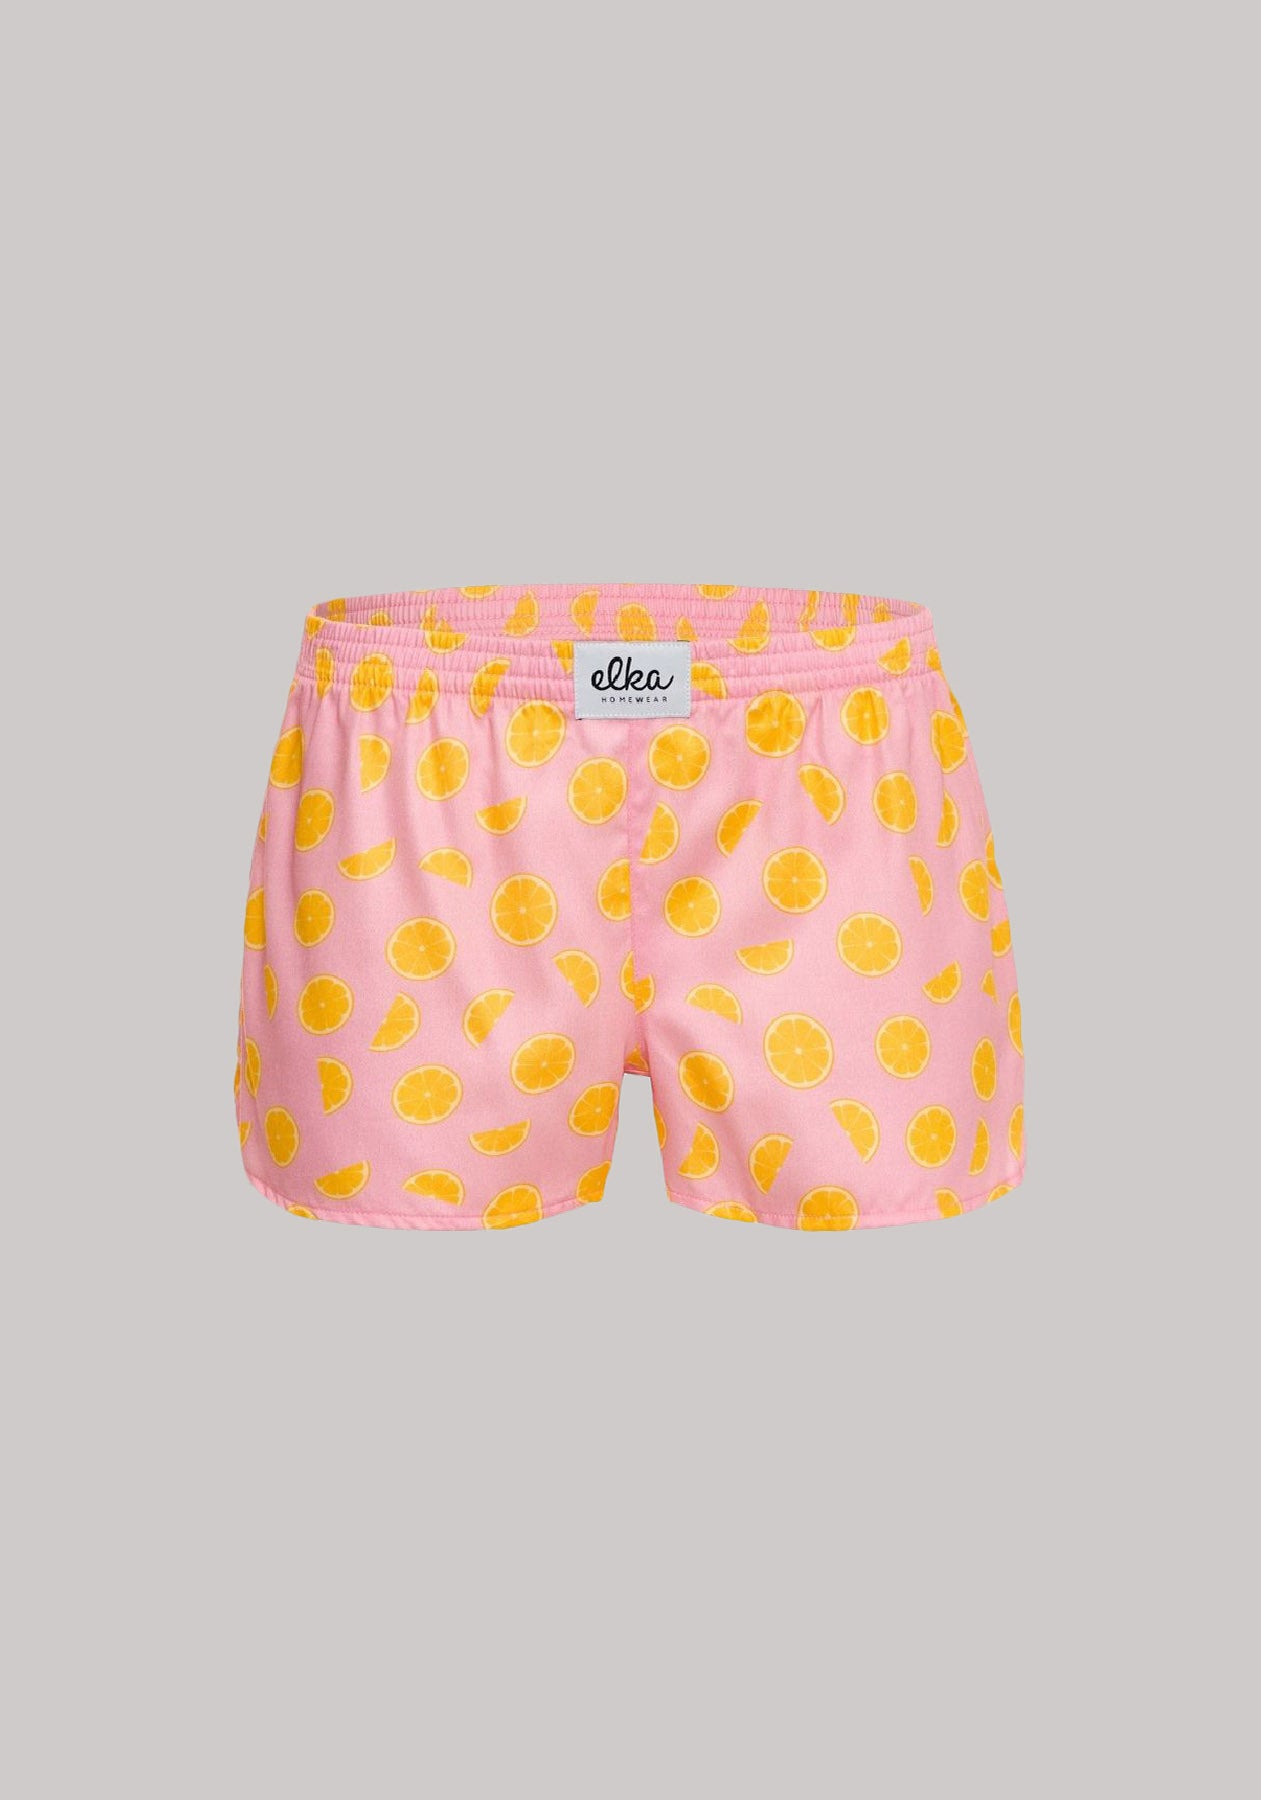 Women's shorts active Lemons